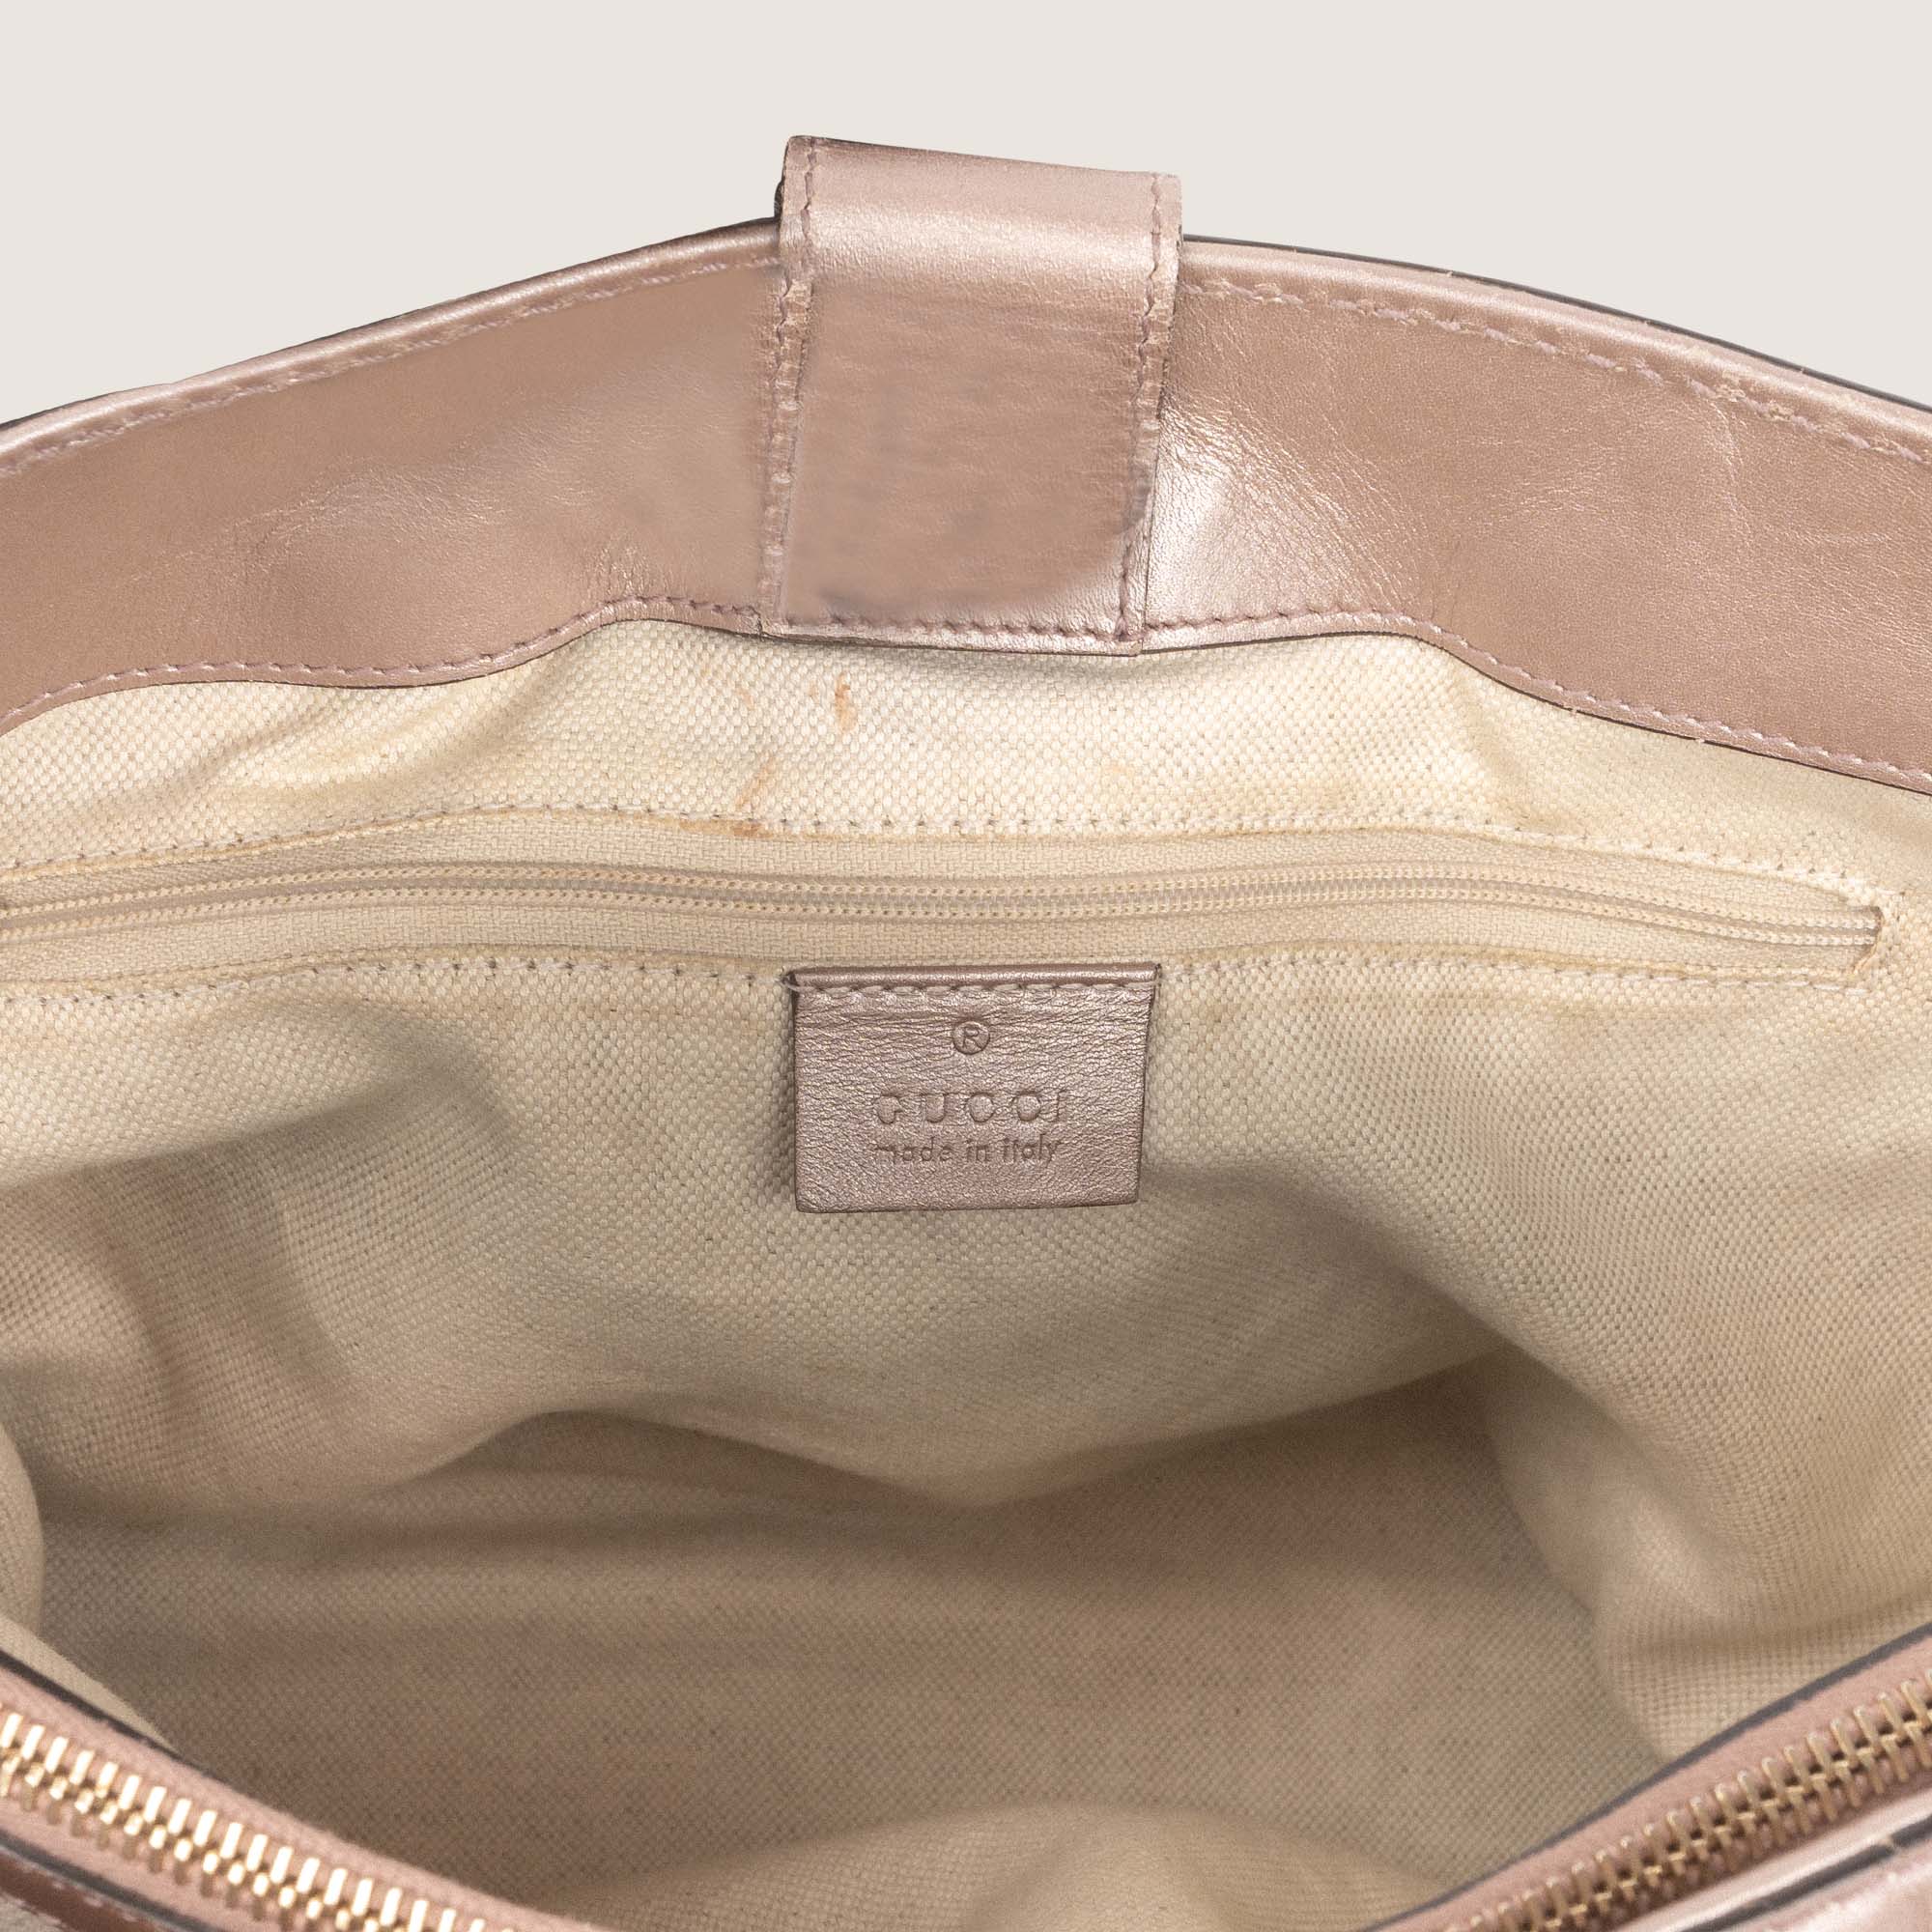 Sukey Guccissima Tote Bag - GUCCI - Affordable Luxury image